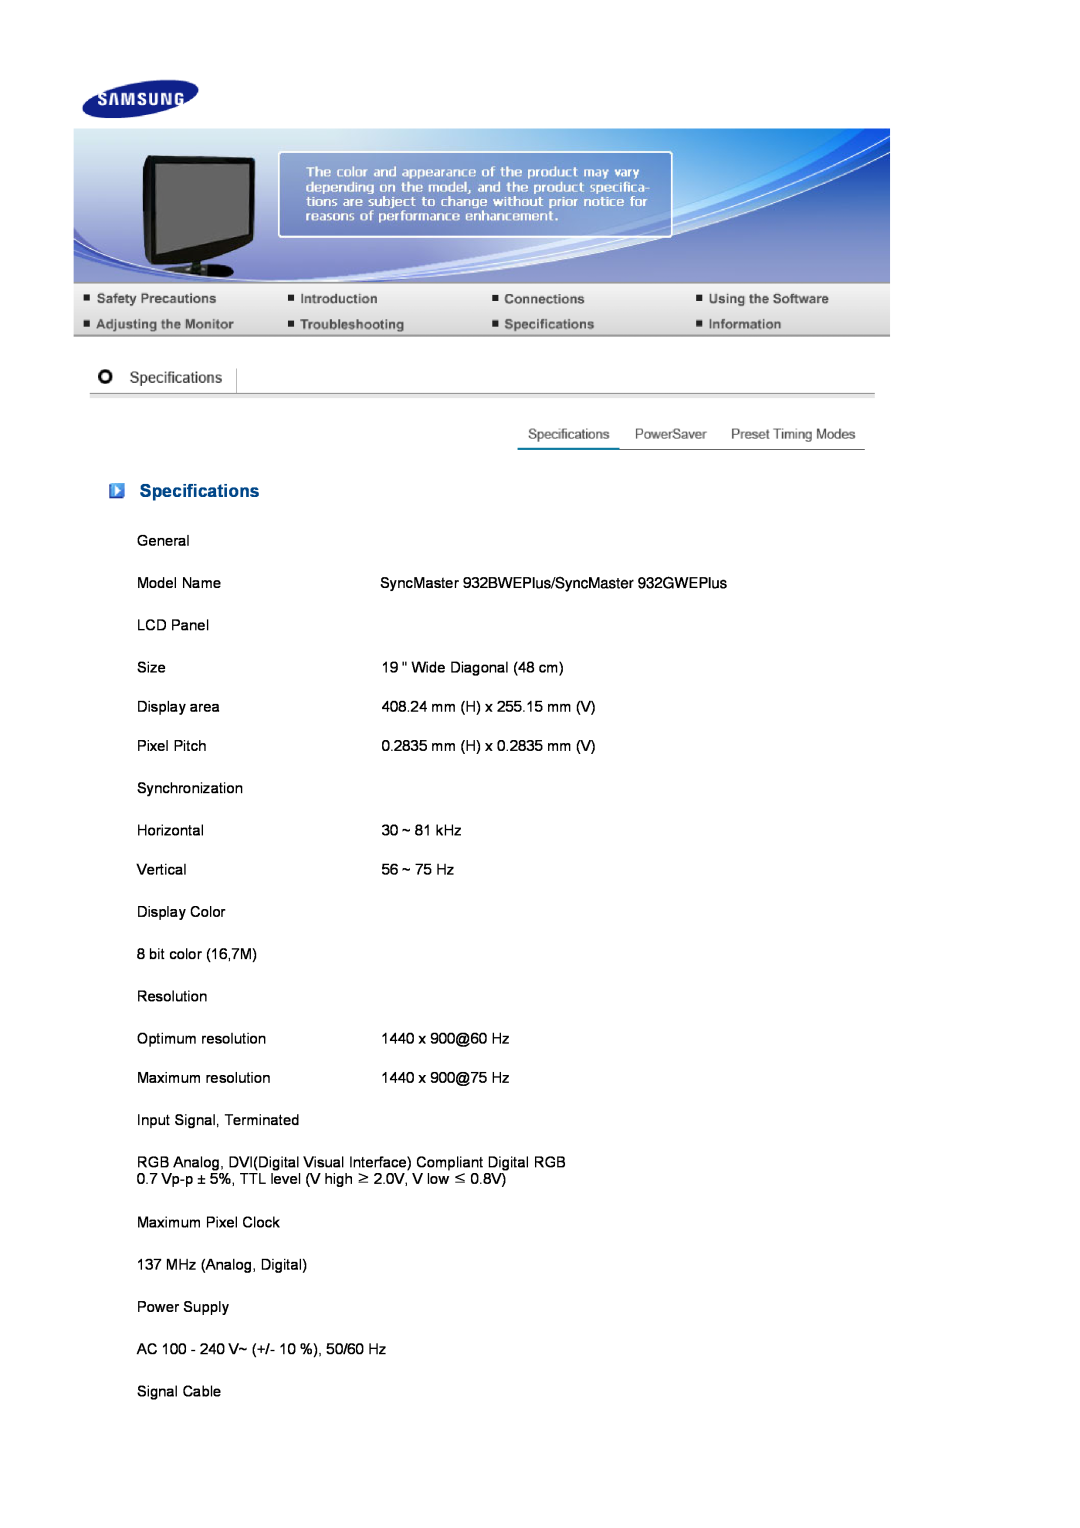 Samsung 932GWEPlus, 932BWEPlus manual Specifications 